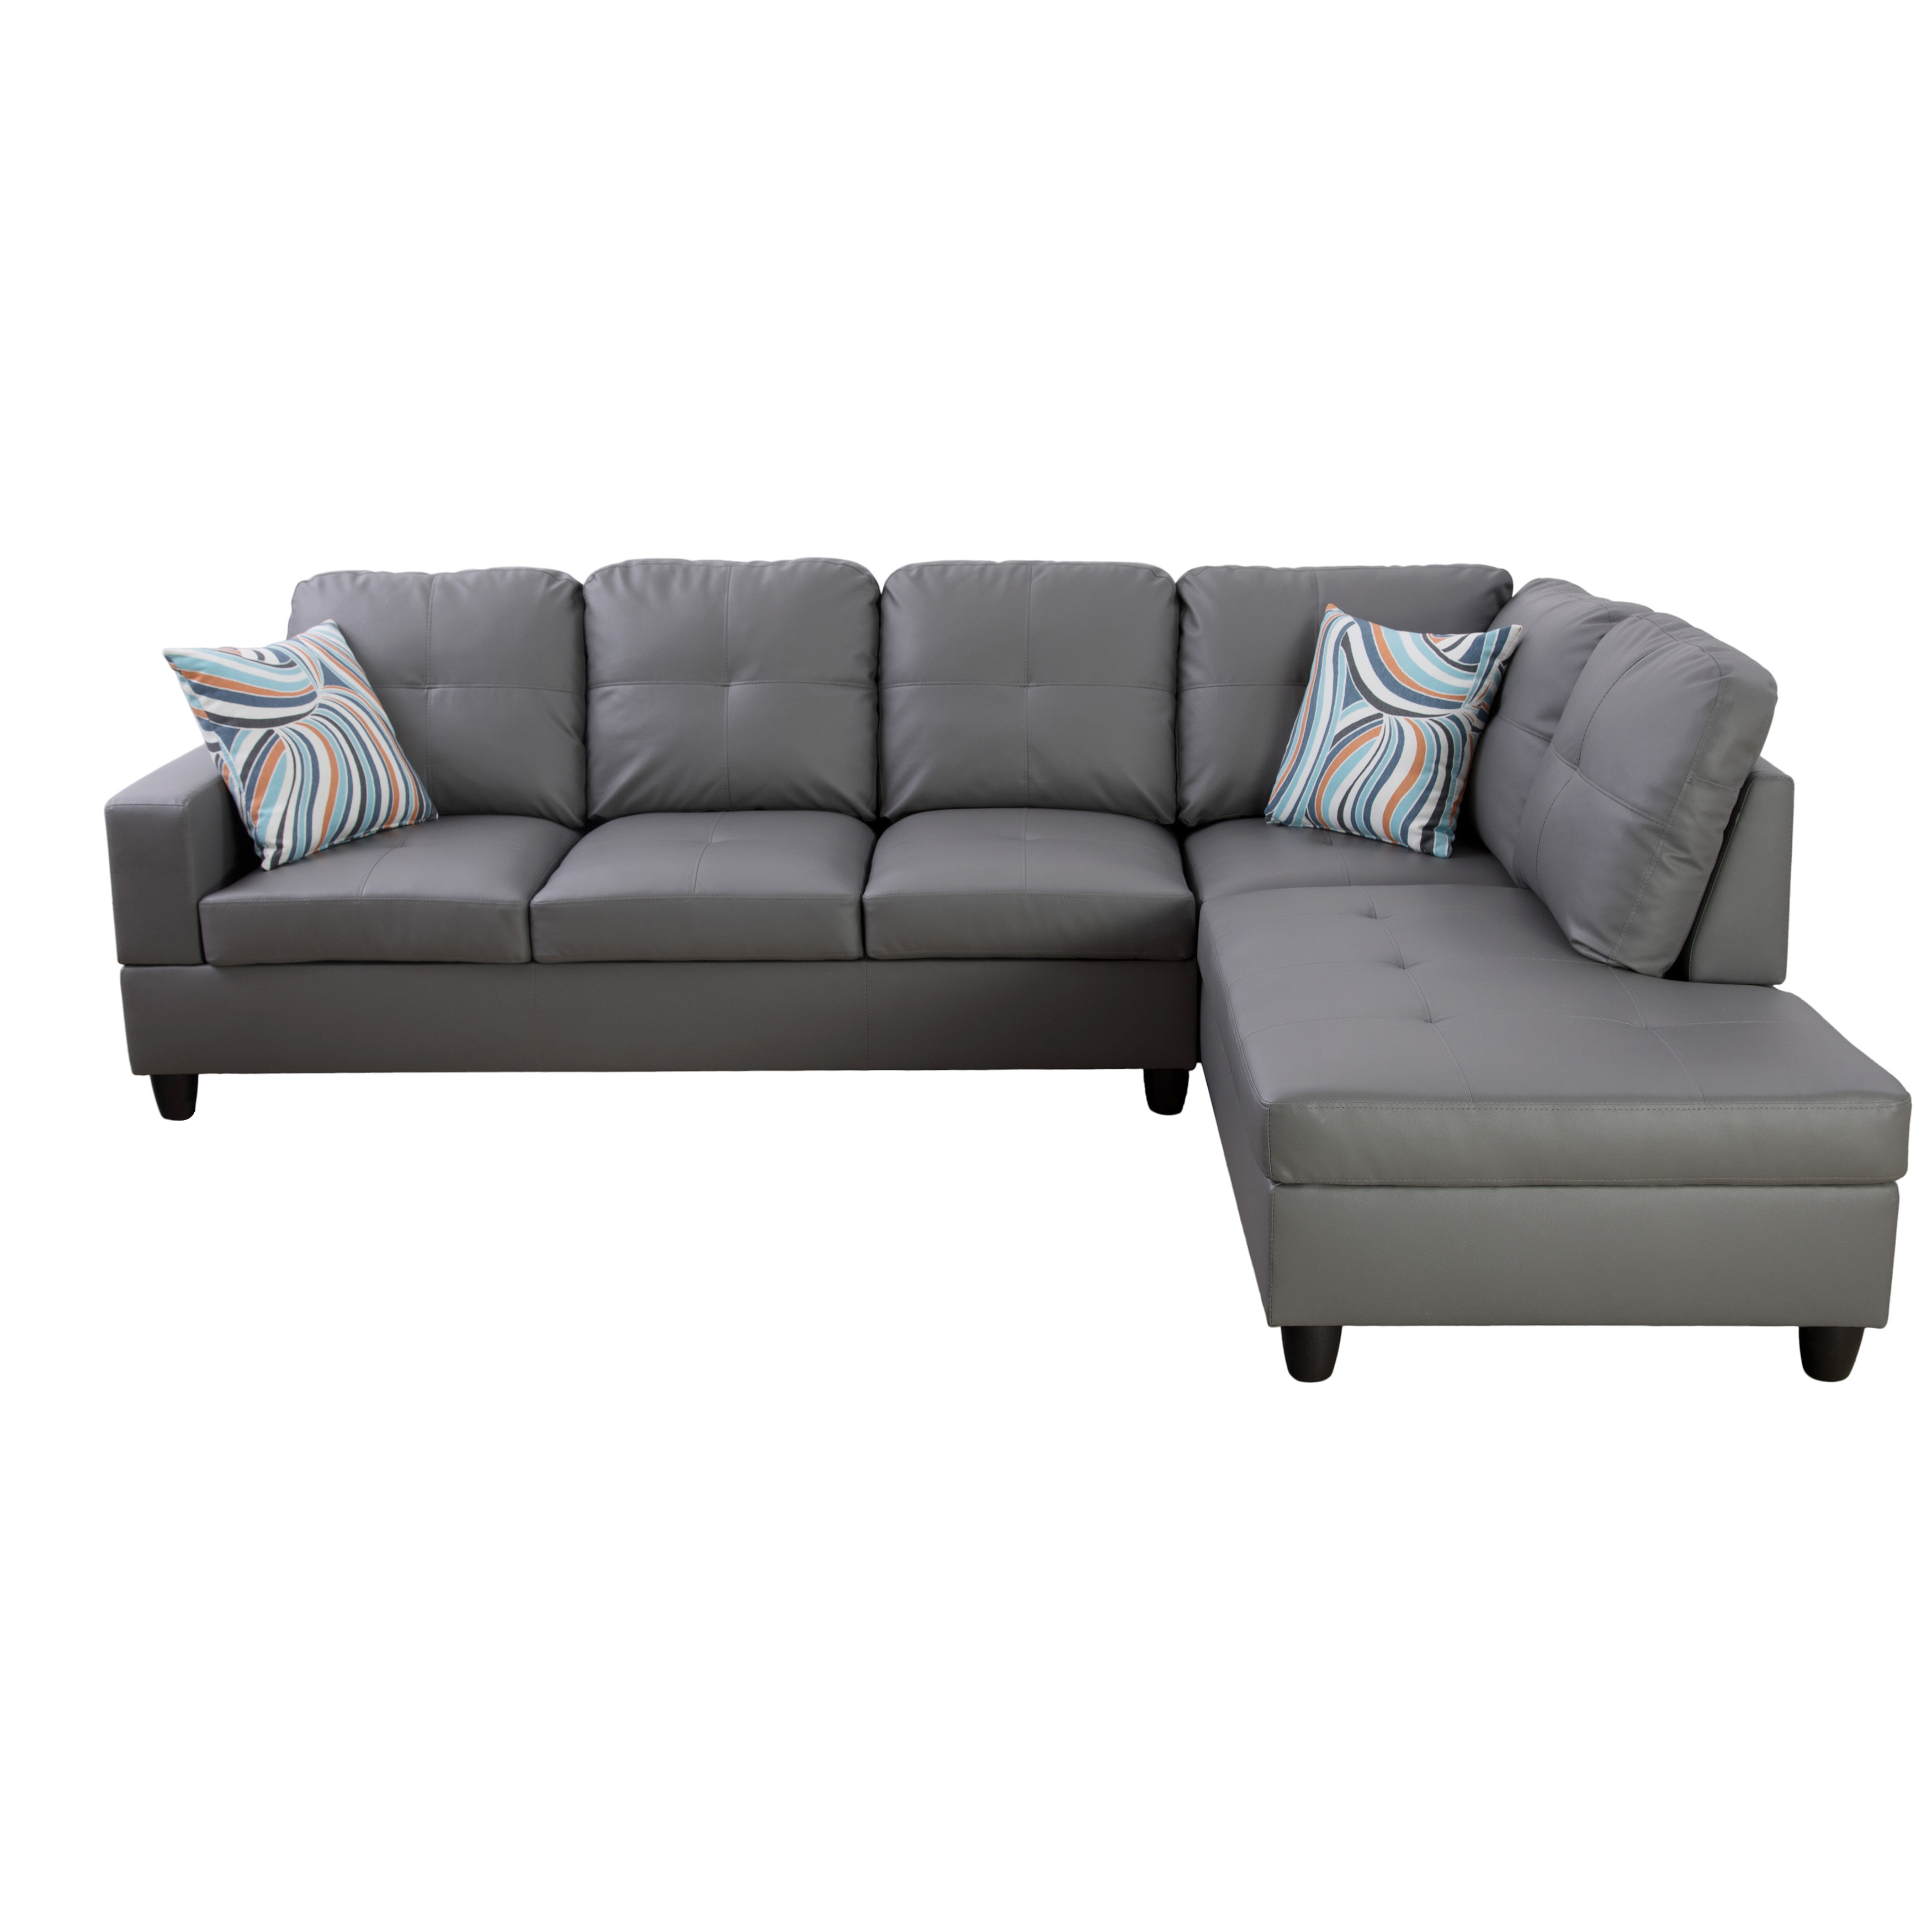 Ainehome Dark Grey L-Shape Leather Combo Sofa Set